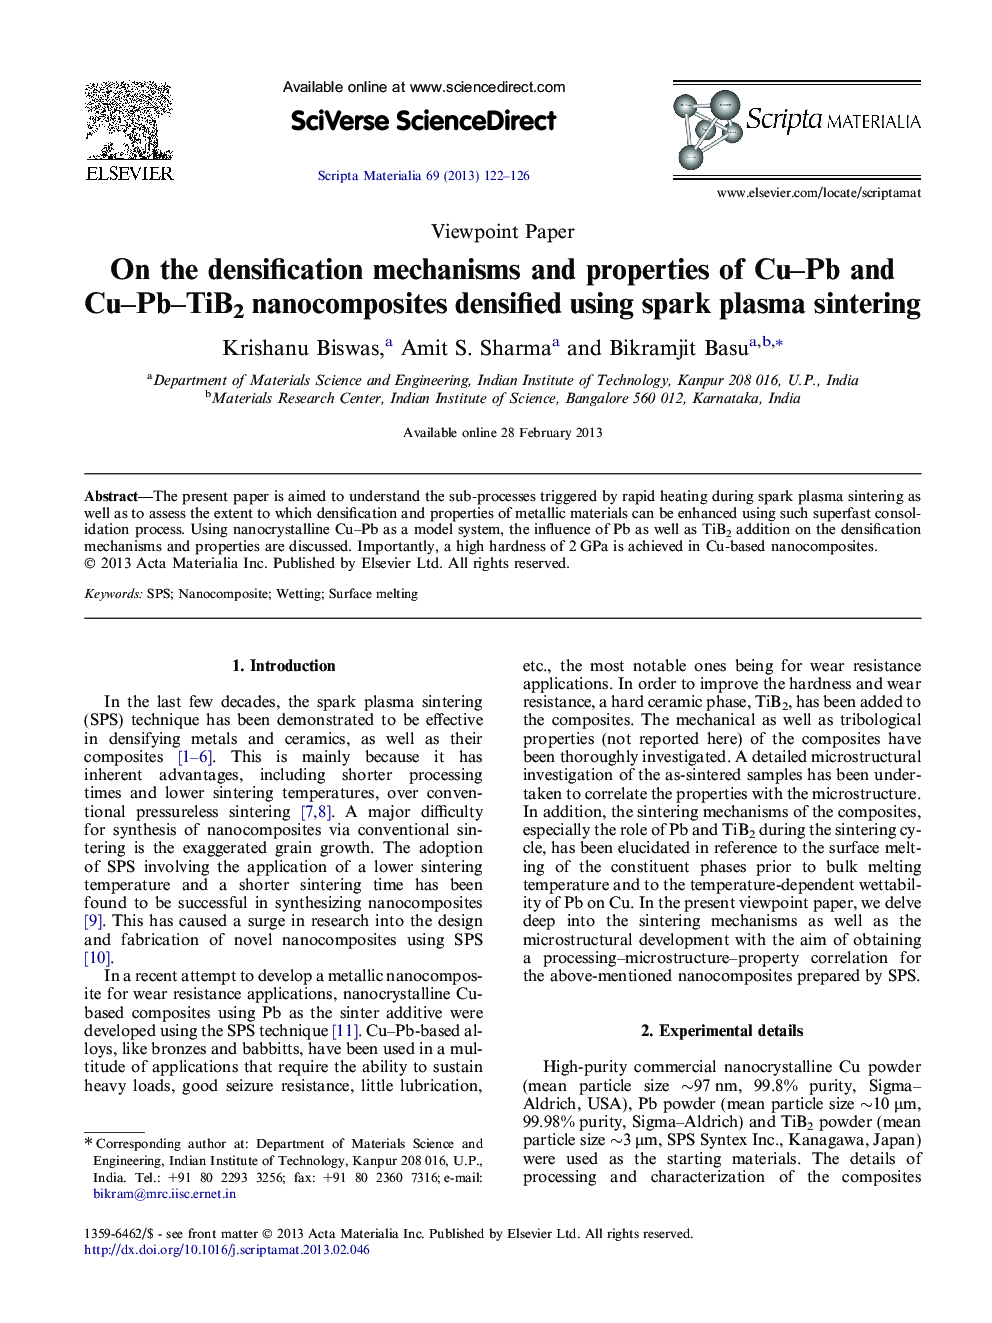 On the densification mechanisms and properties of Cu–Pb and Cu–Pb–TiB2 nanocomposites densified using spark plasma sintering